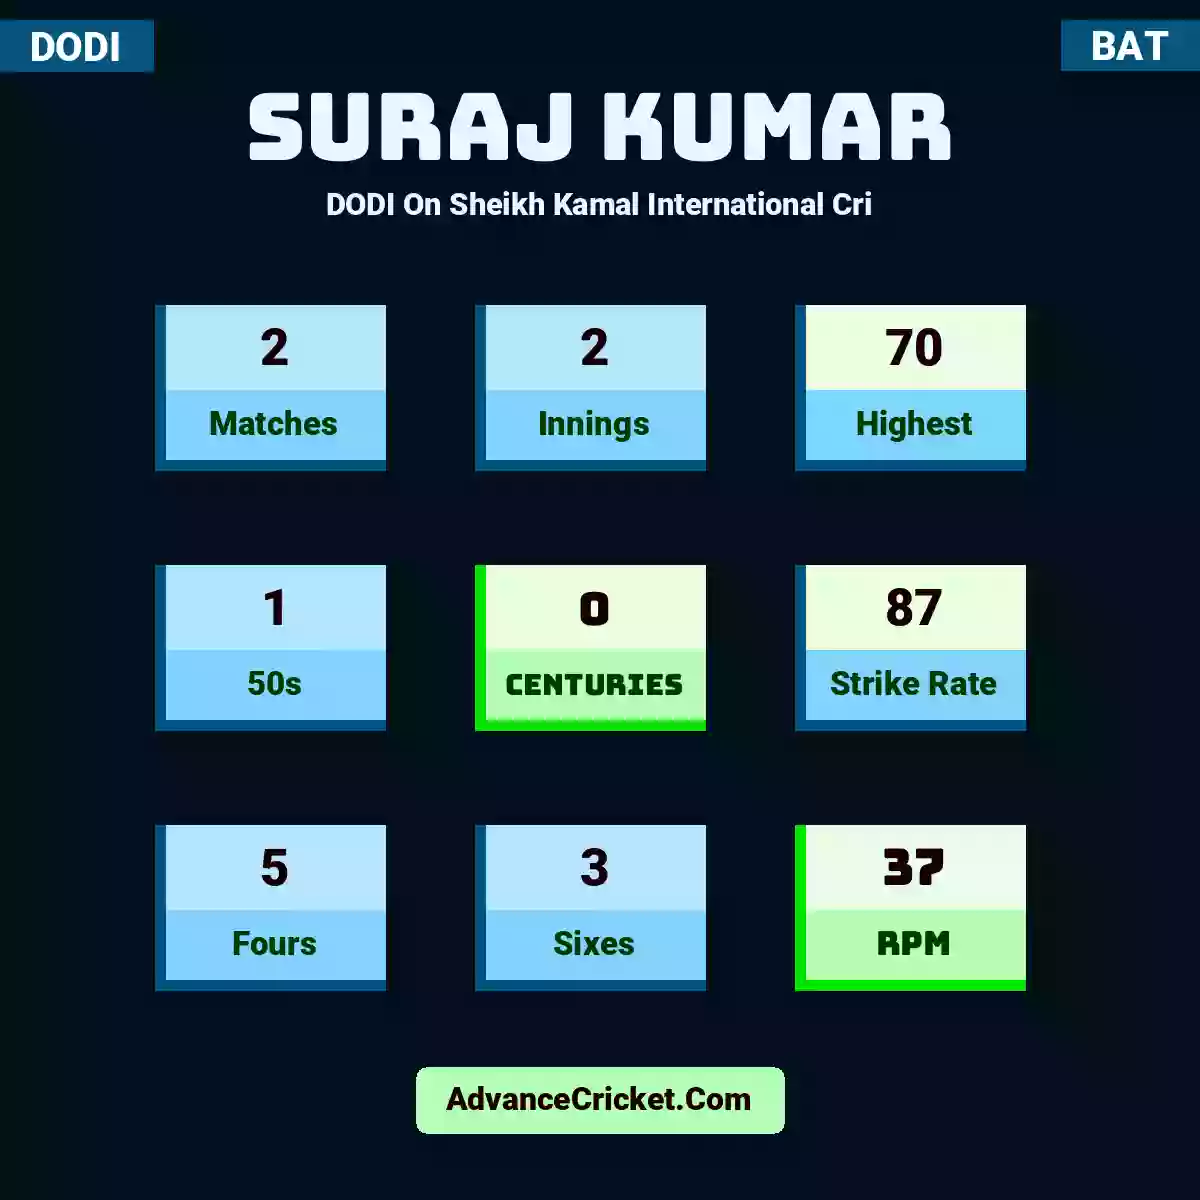 Suraj Kumar DODI  On Sheikh Kamal International Cri, Suraj Kumar played 1 matches, scored 0 runs as highest, 0 half-centuries, and 0 centuries, with a strike rate of 0. S.Kumar hit 0 fours and 0 sixes.